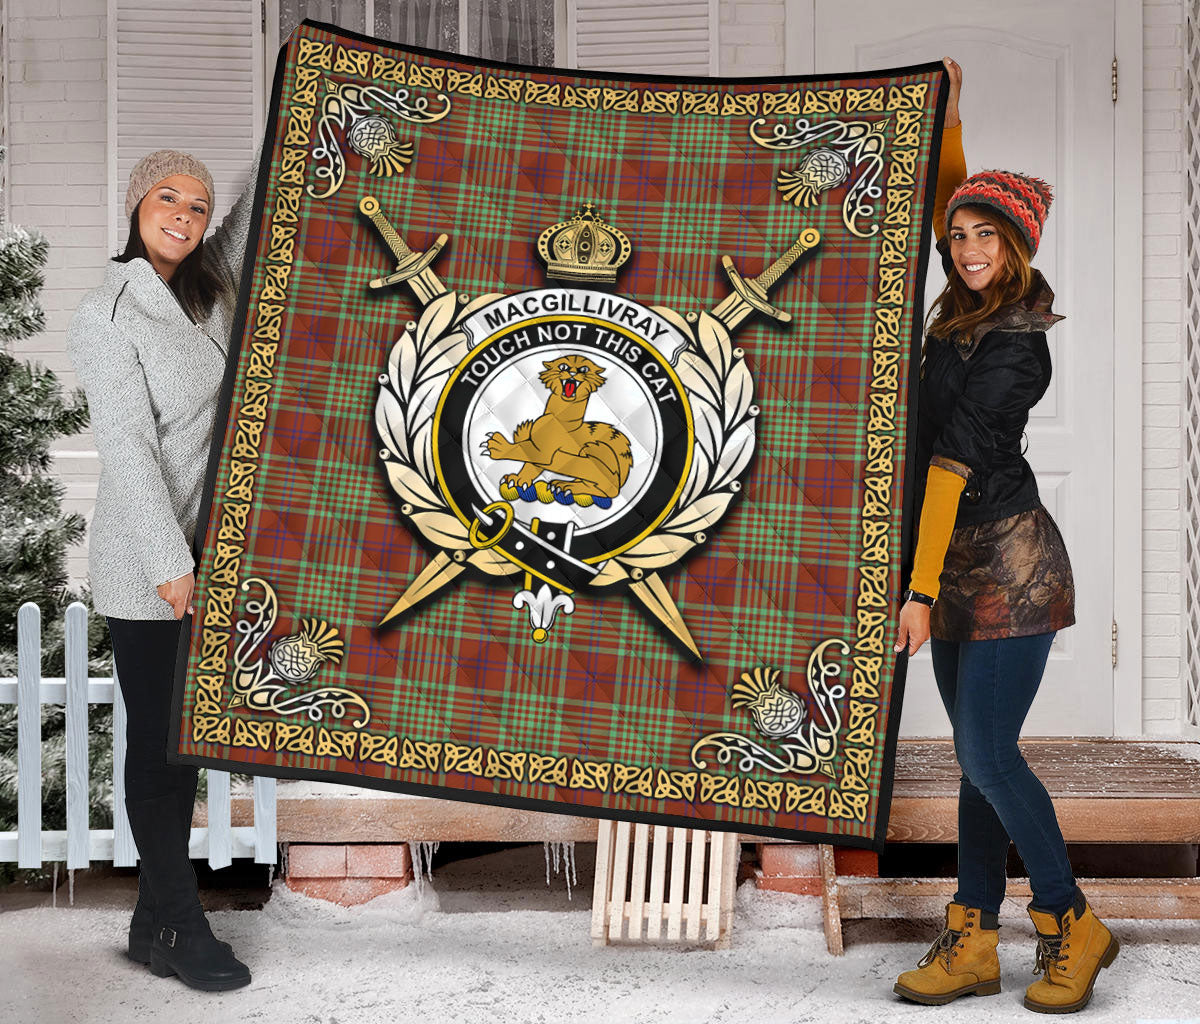 MacGillivray Hunting Ancient Tartan Crest Premium Quilt - Celtic Thistle Style